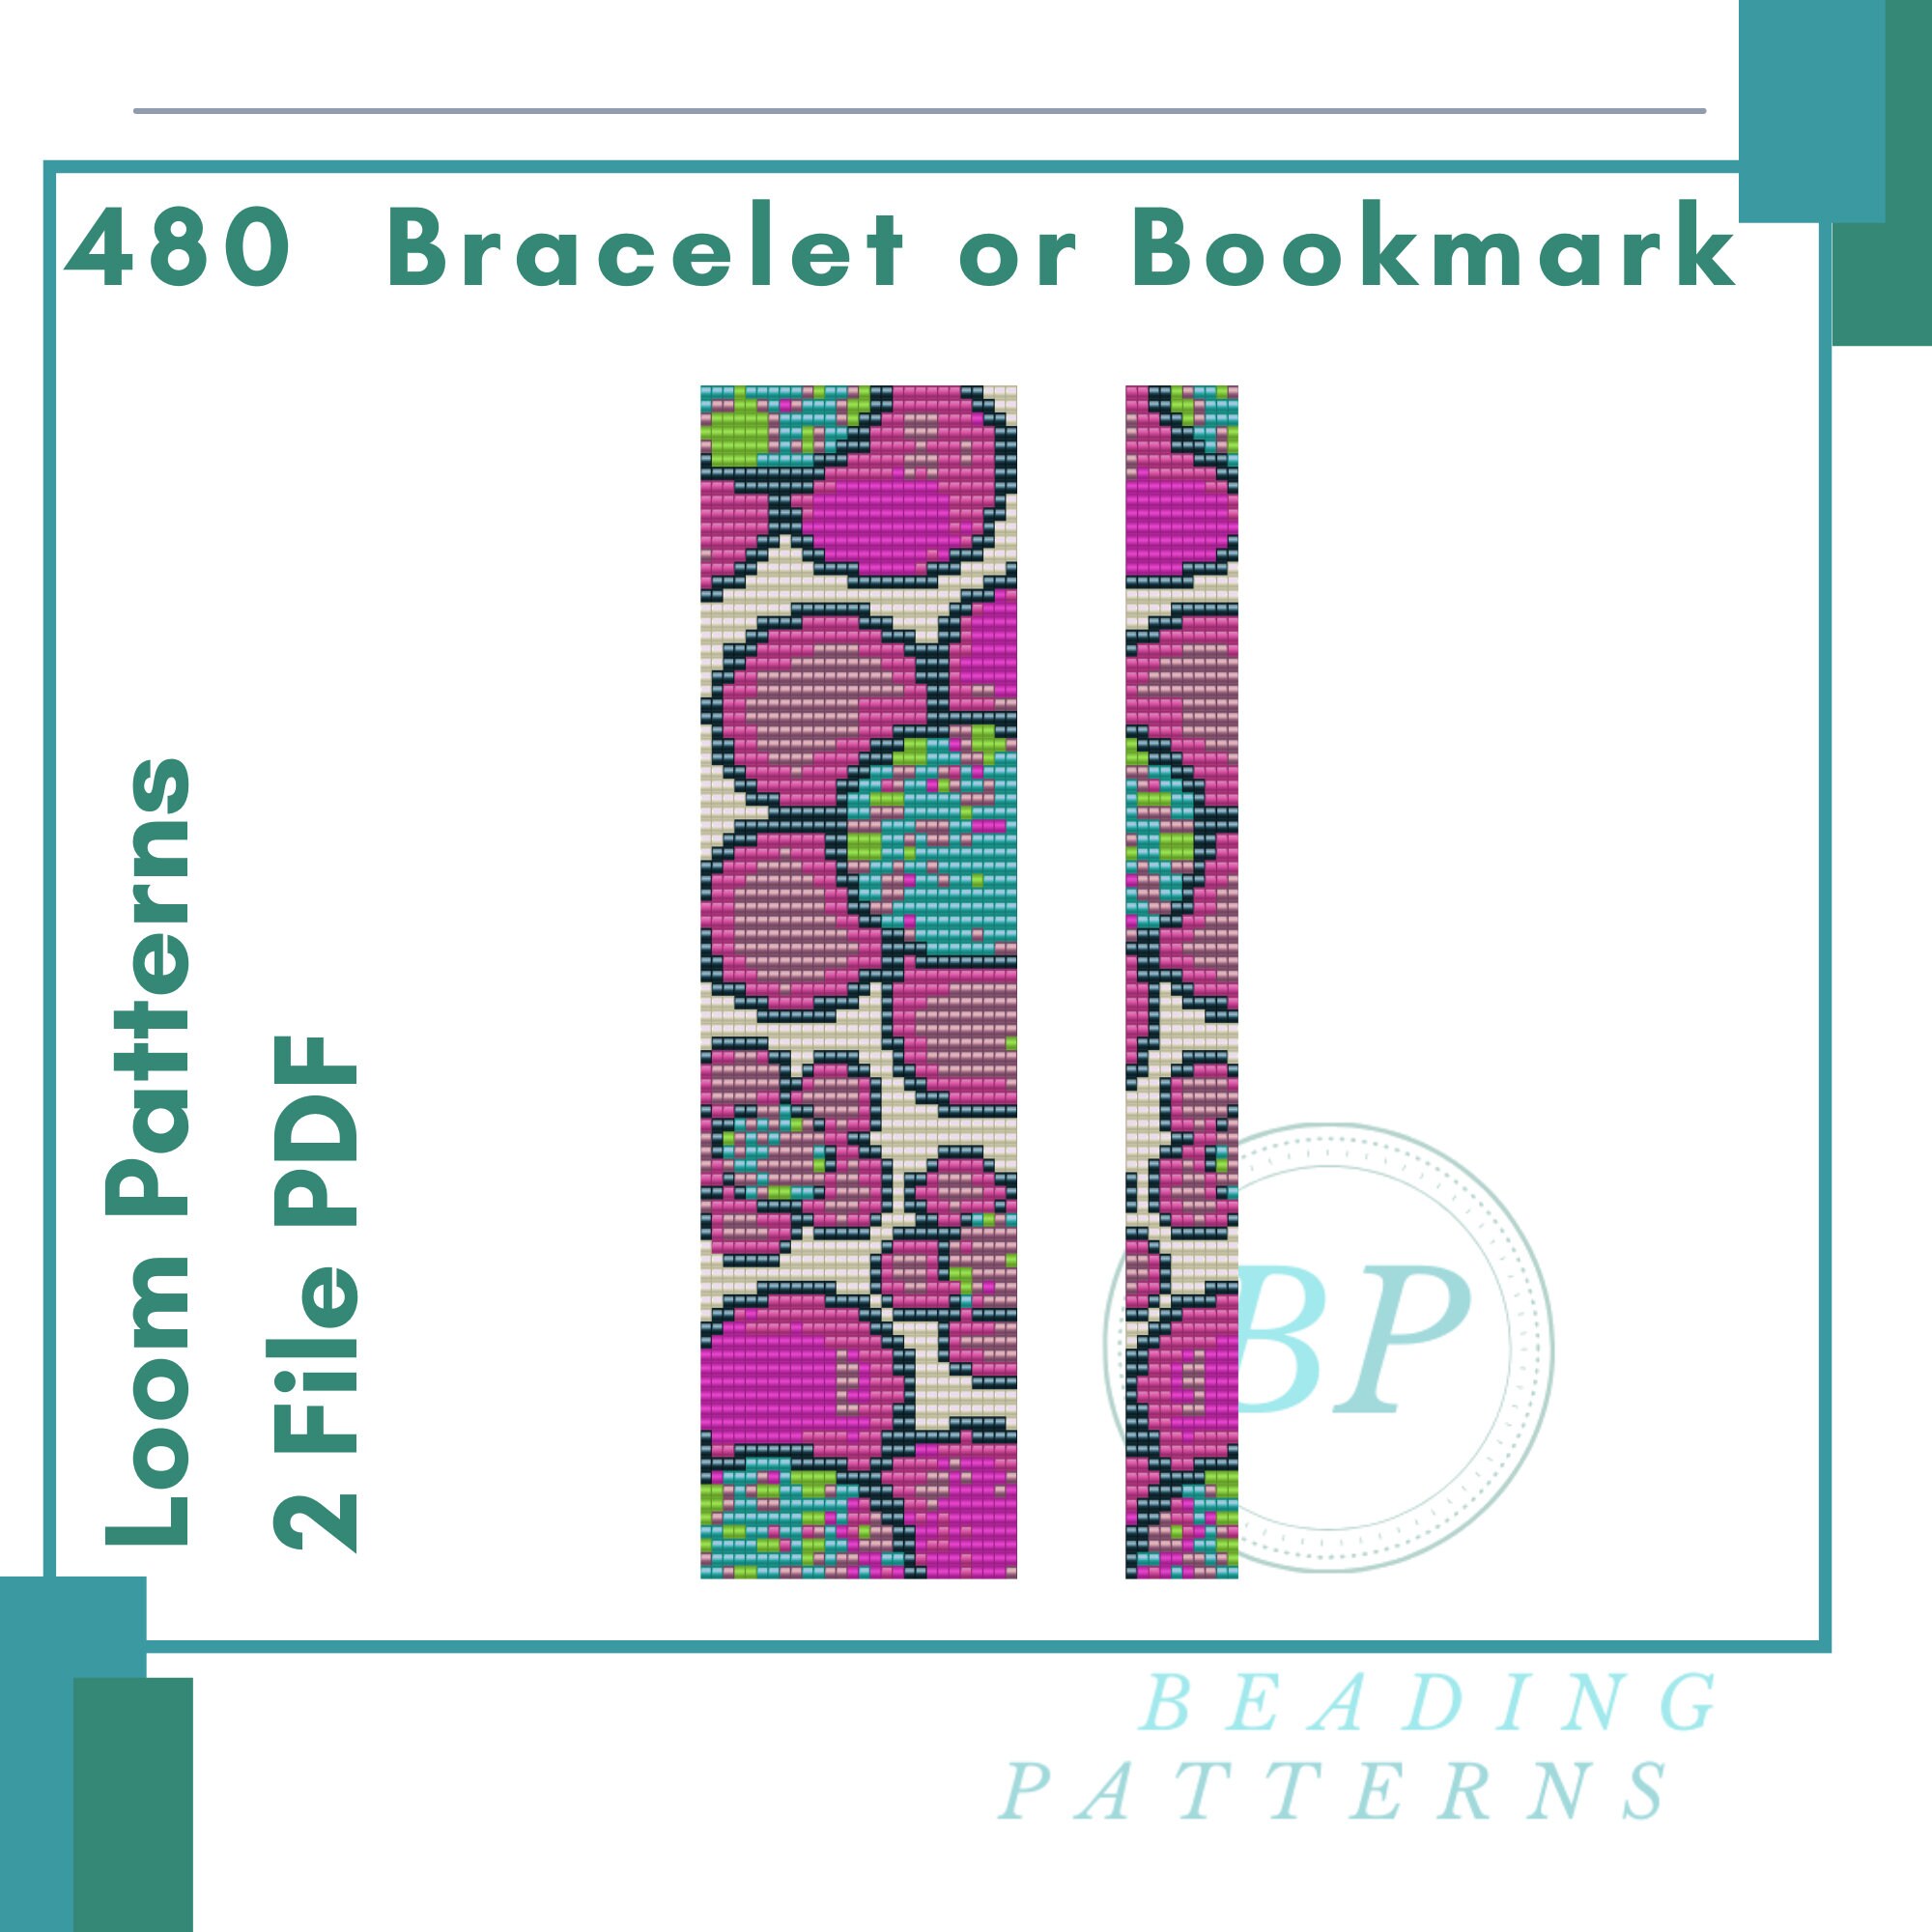 Bead Loom Pattern Native Inspired LOOM Bracelet Patterns Set 